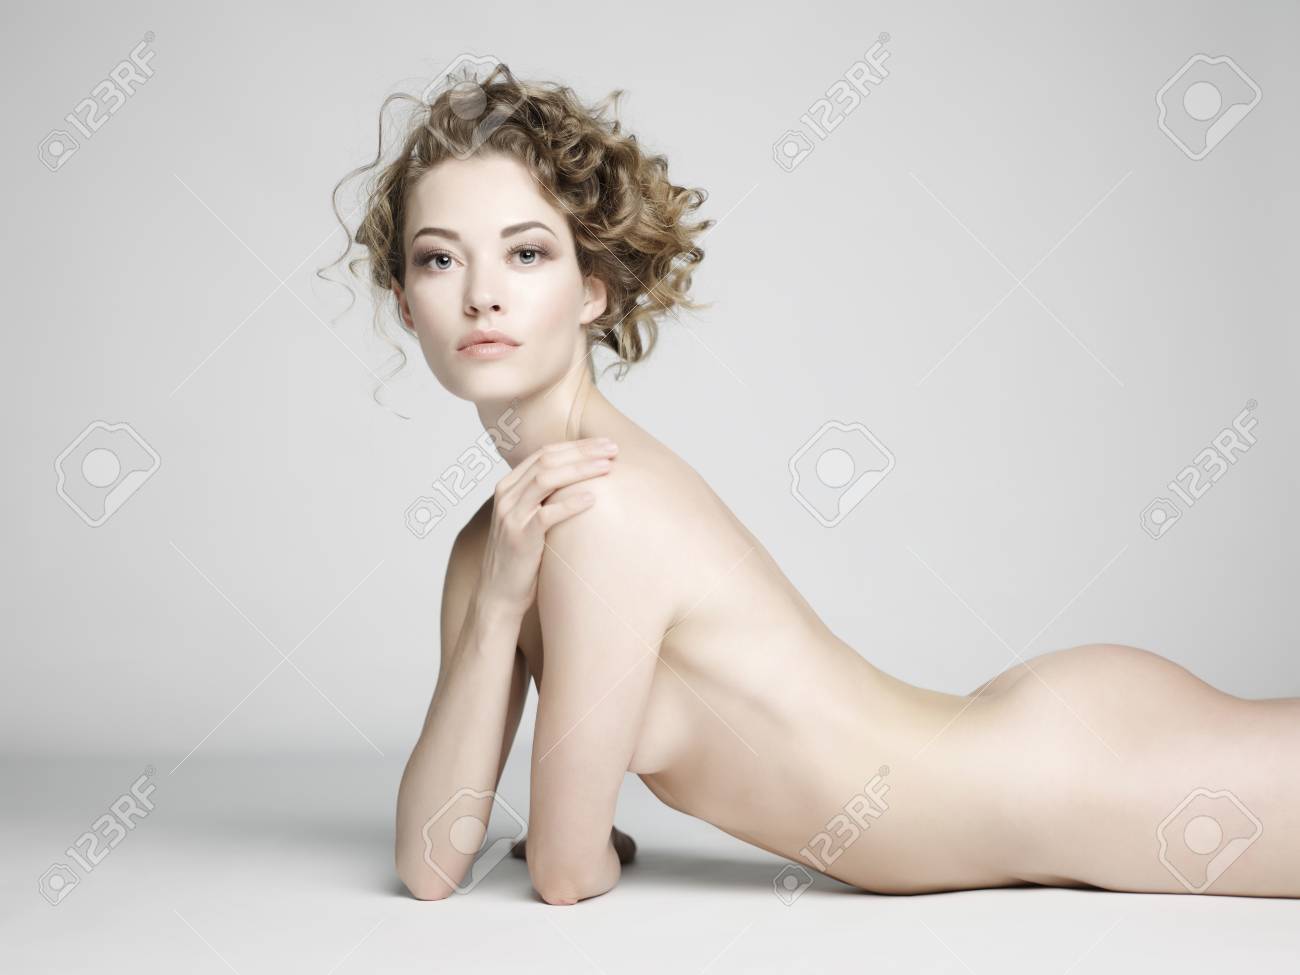 Erotic sex photographs women beautiful